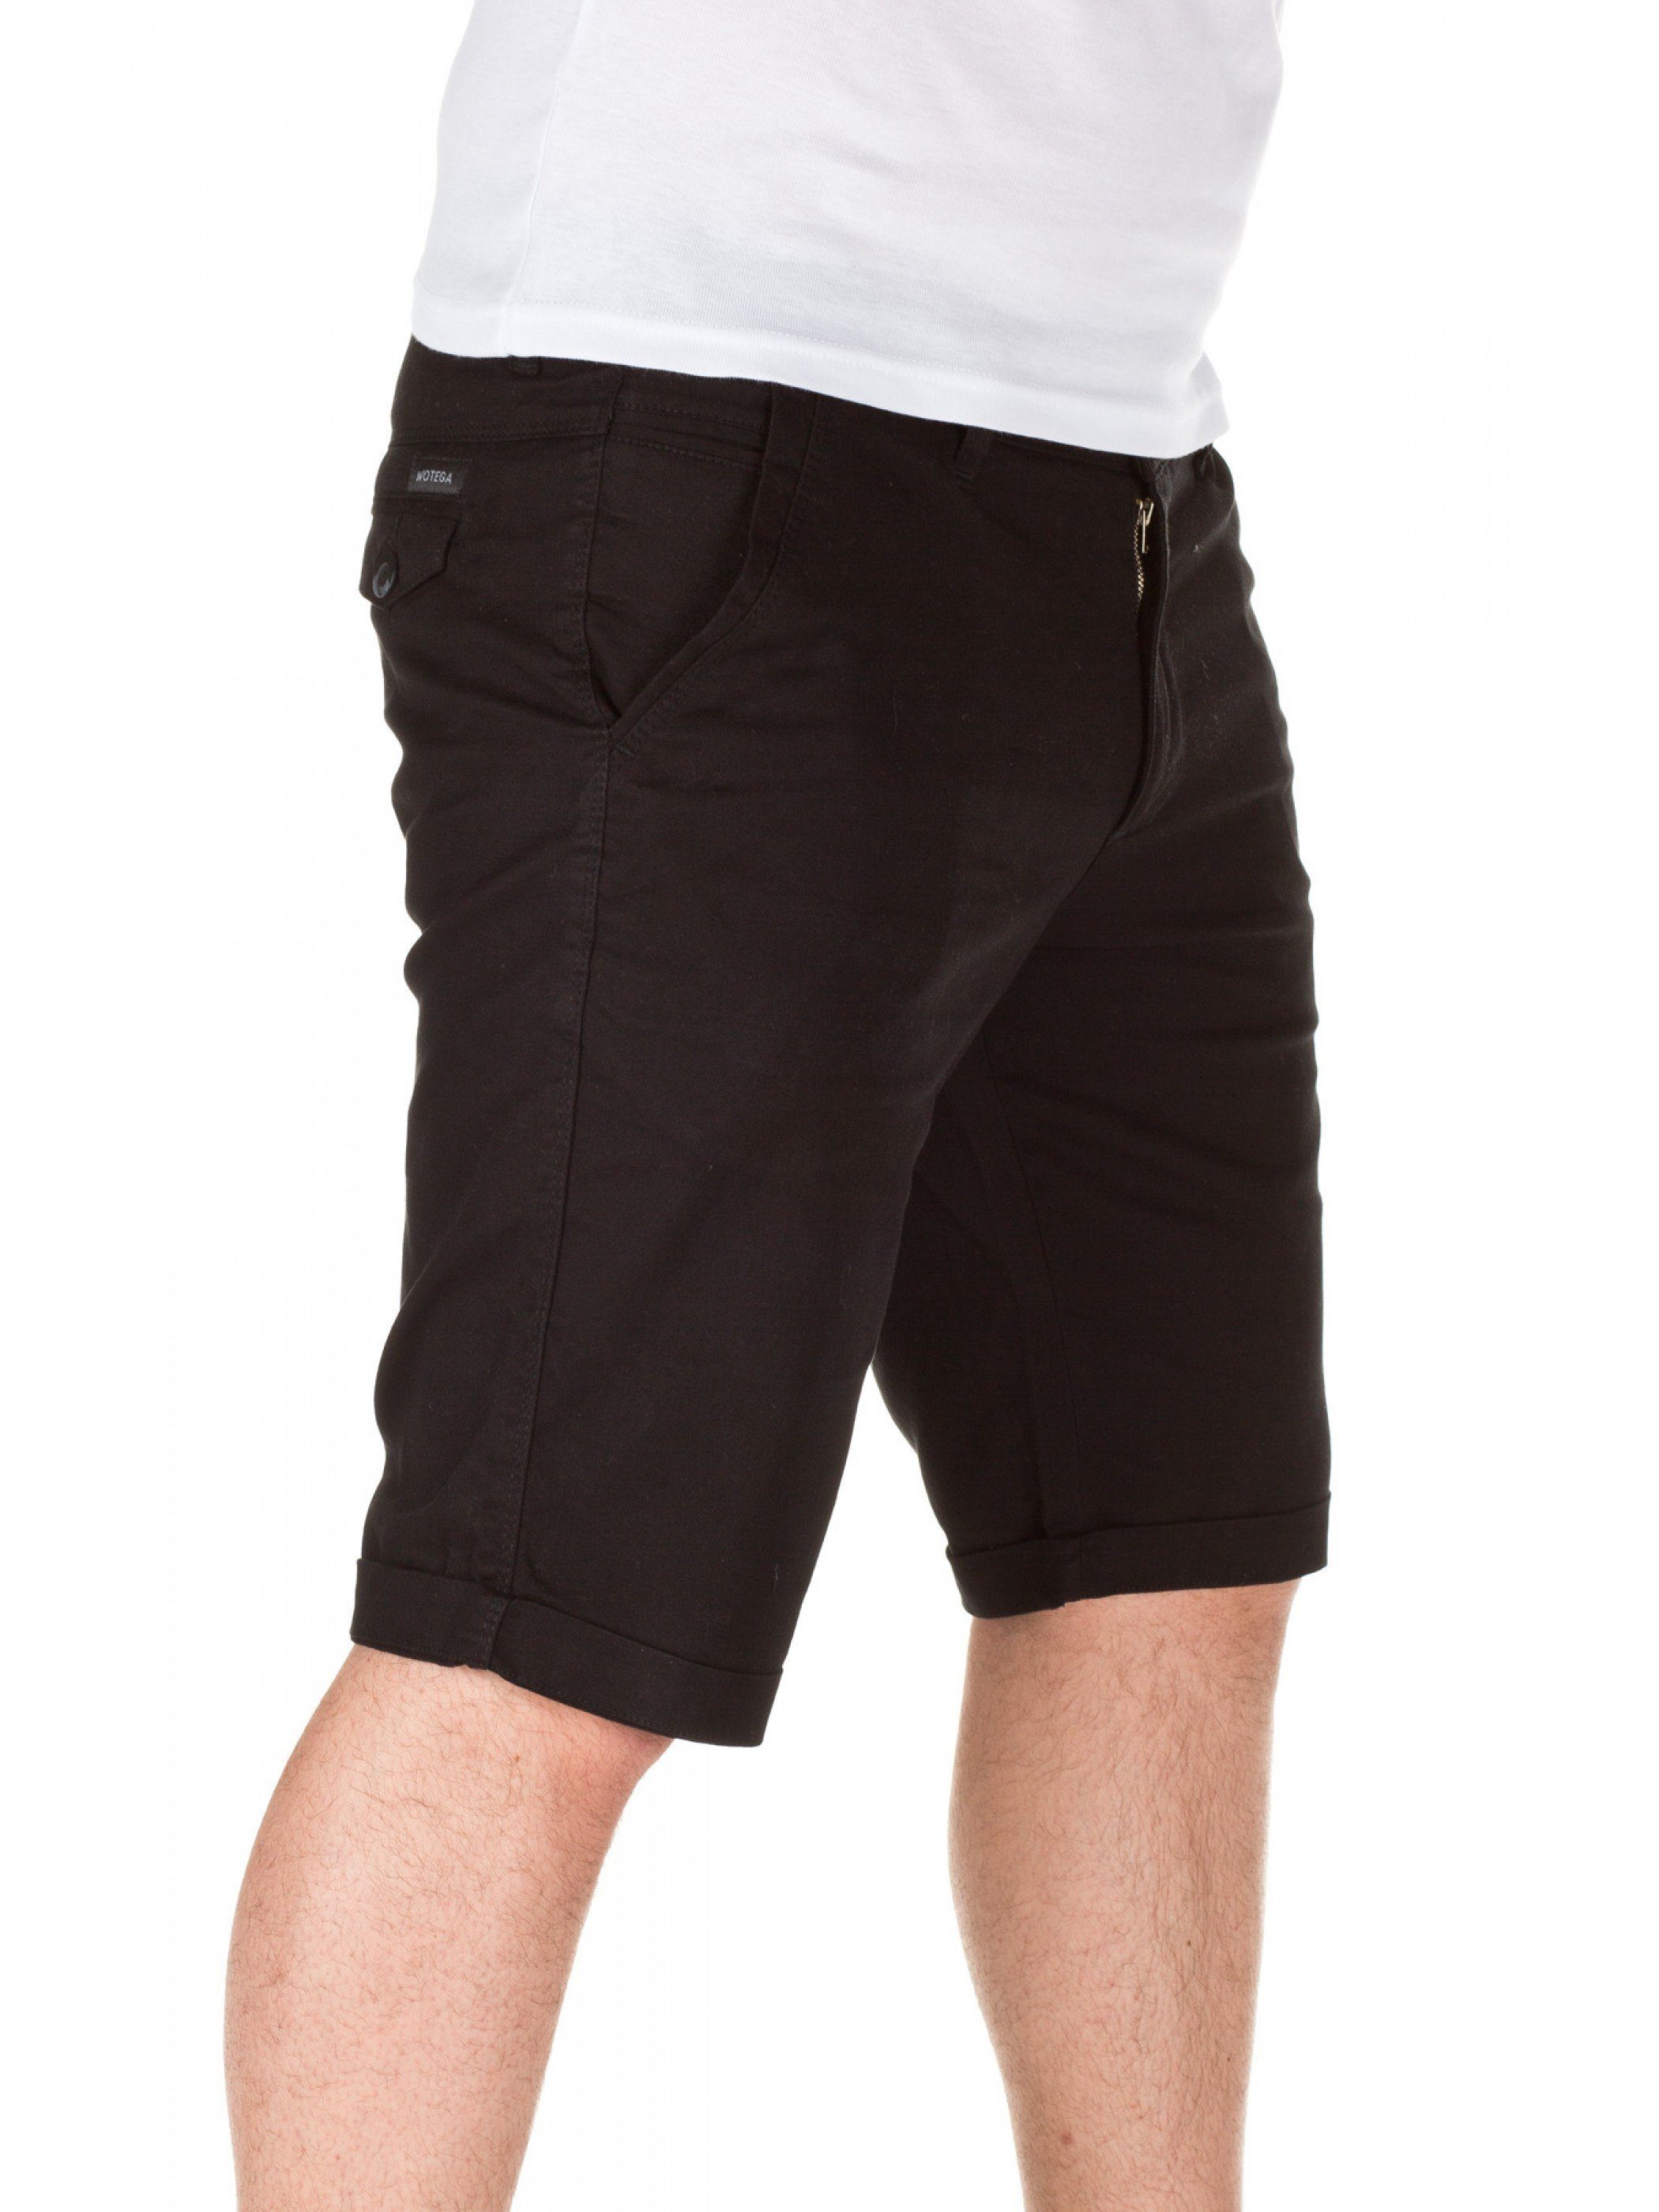 Schwarz in Alex shorts Shorts WOTEGA Chino (black 9500) WOTEGA Unifarbe -